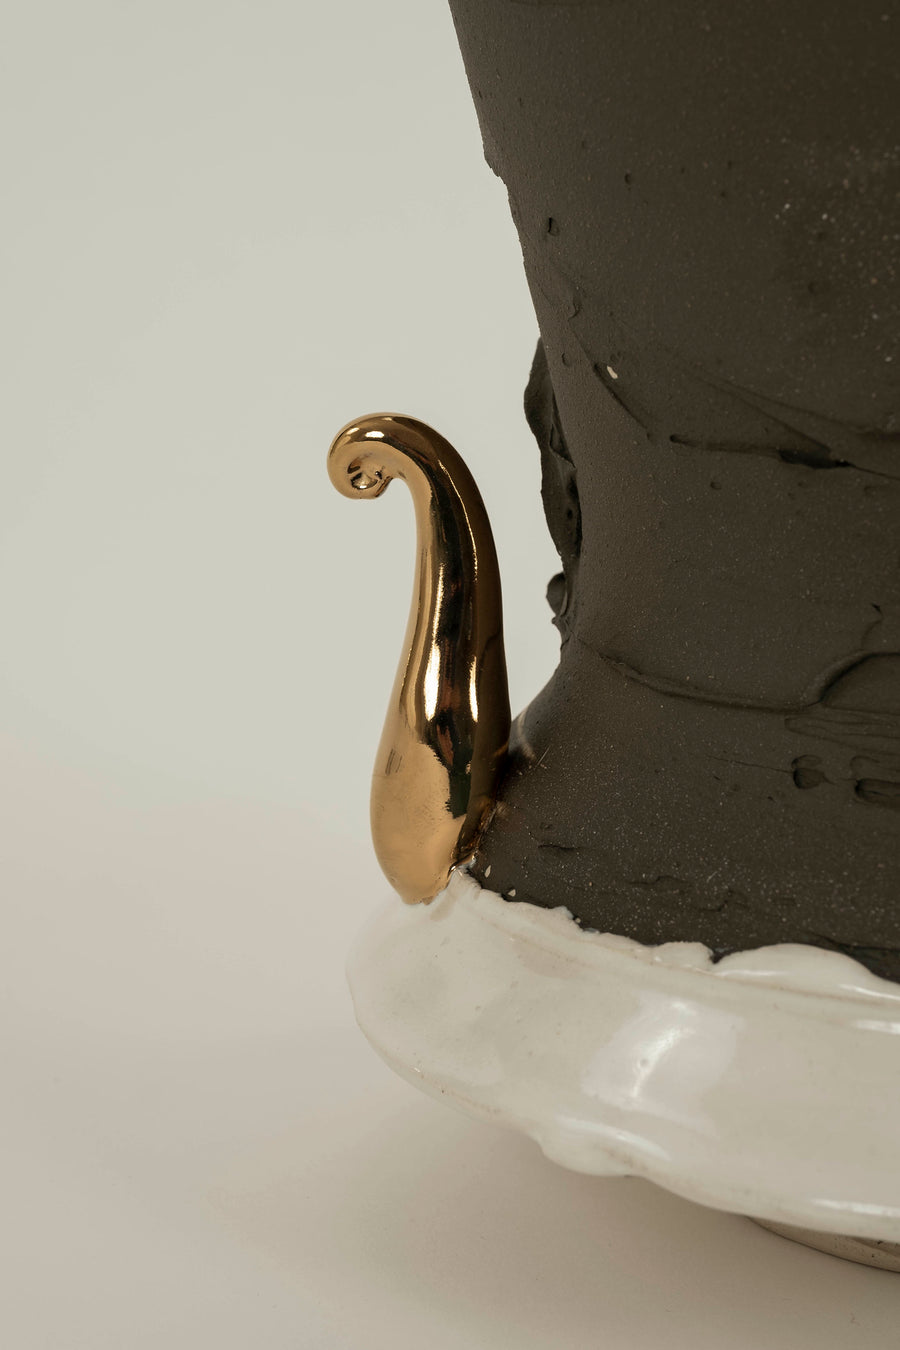 Splash of Gold Gris Porcelain Vase, Chase Gamblin